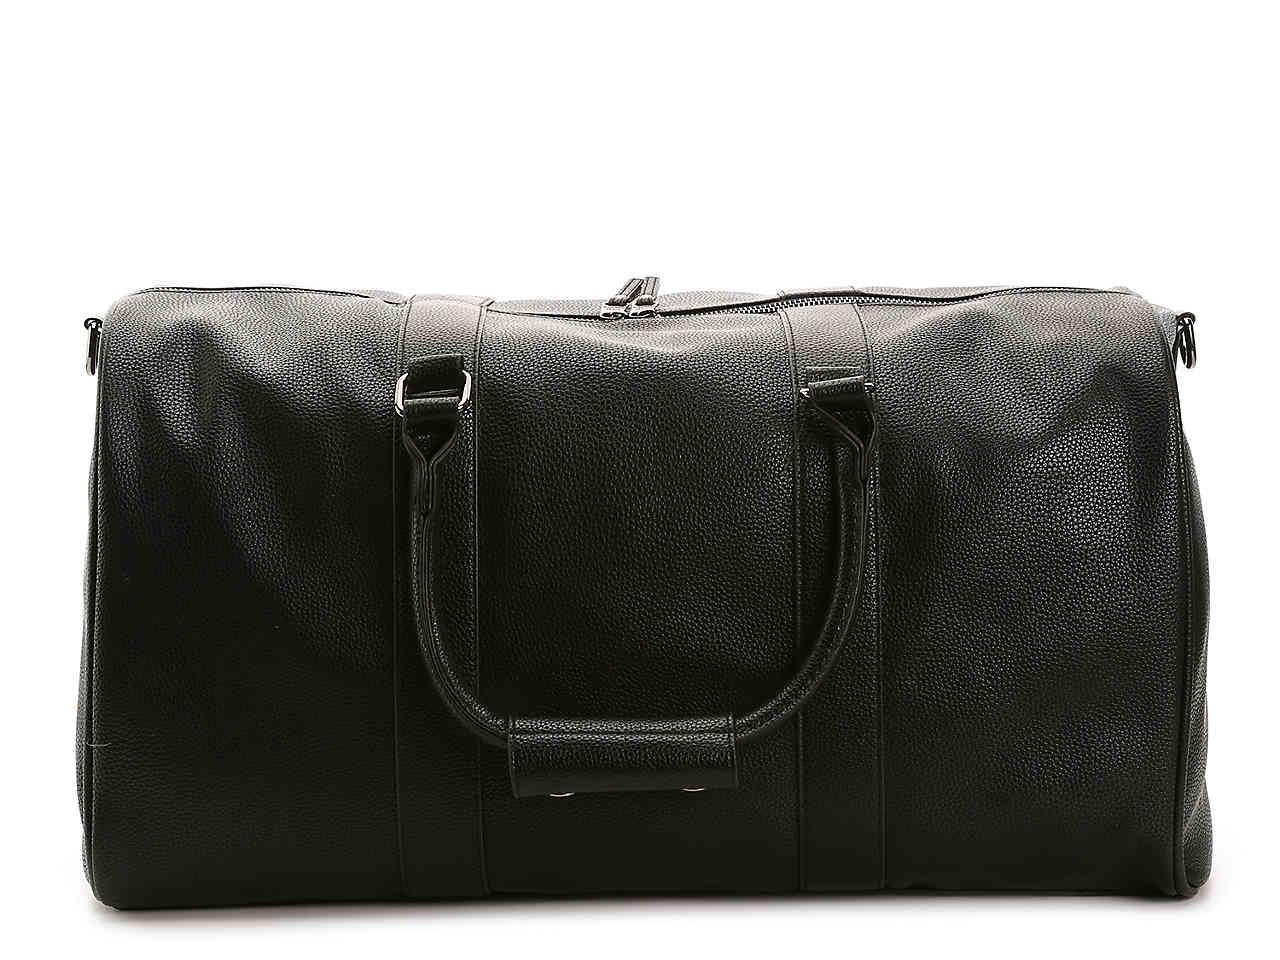 Steve Madden Steven Madden Black Duffel Bag - $50 - From Briss